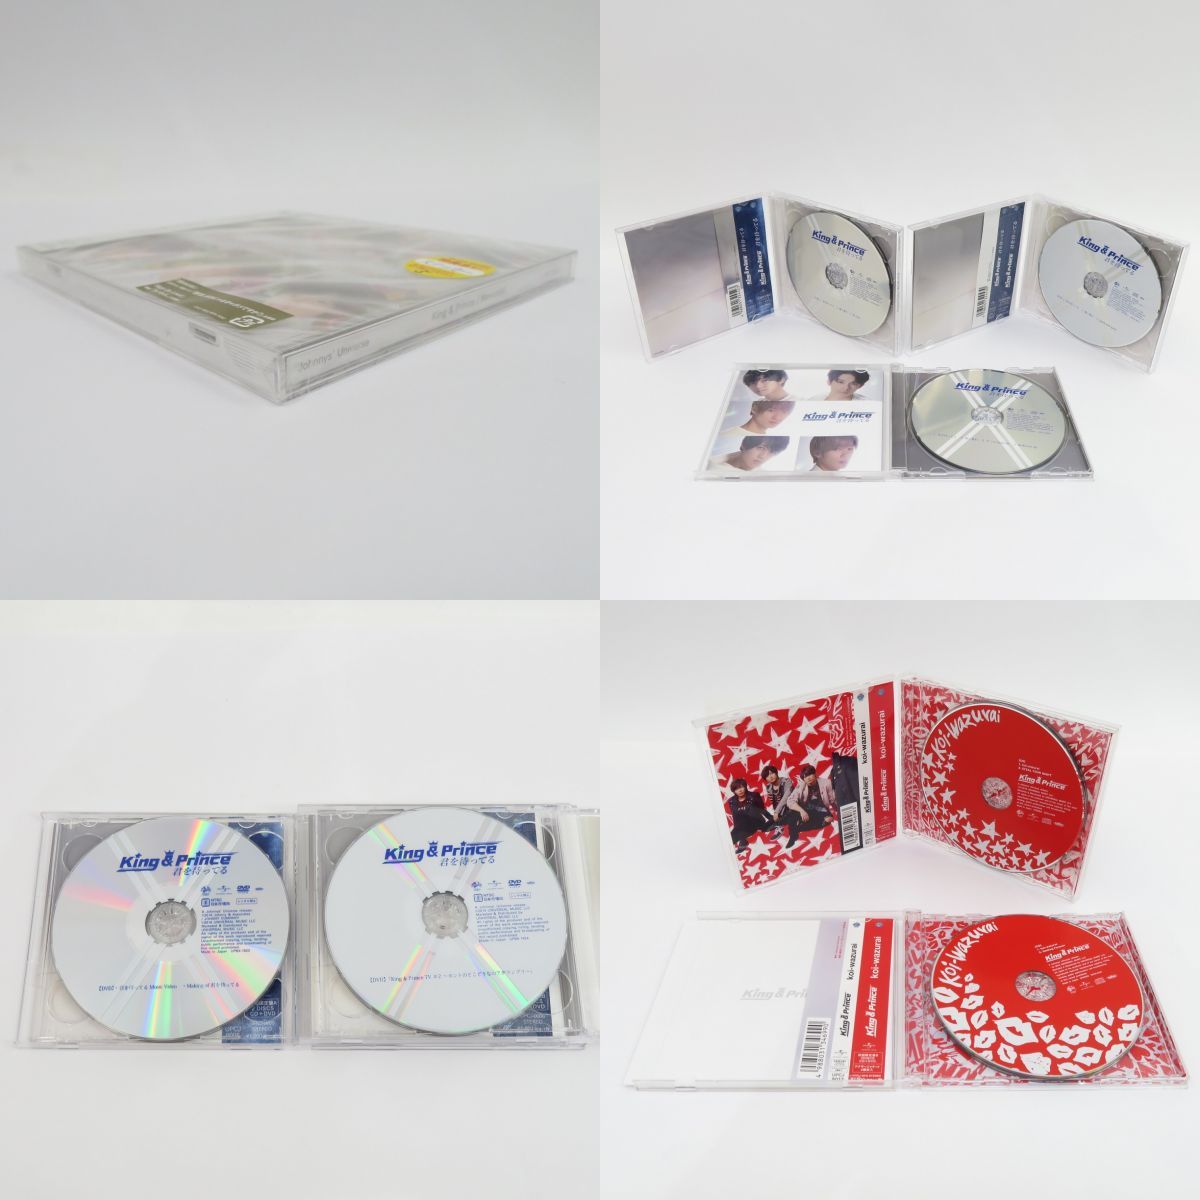 CD+DVD/CD King＆Prince Memorial・君を待ってる・koi-wazurai・Mazy Night 初回盤A・B・通常盤  計12枚 セット ※中古(未開封あり) - メルカリ